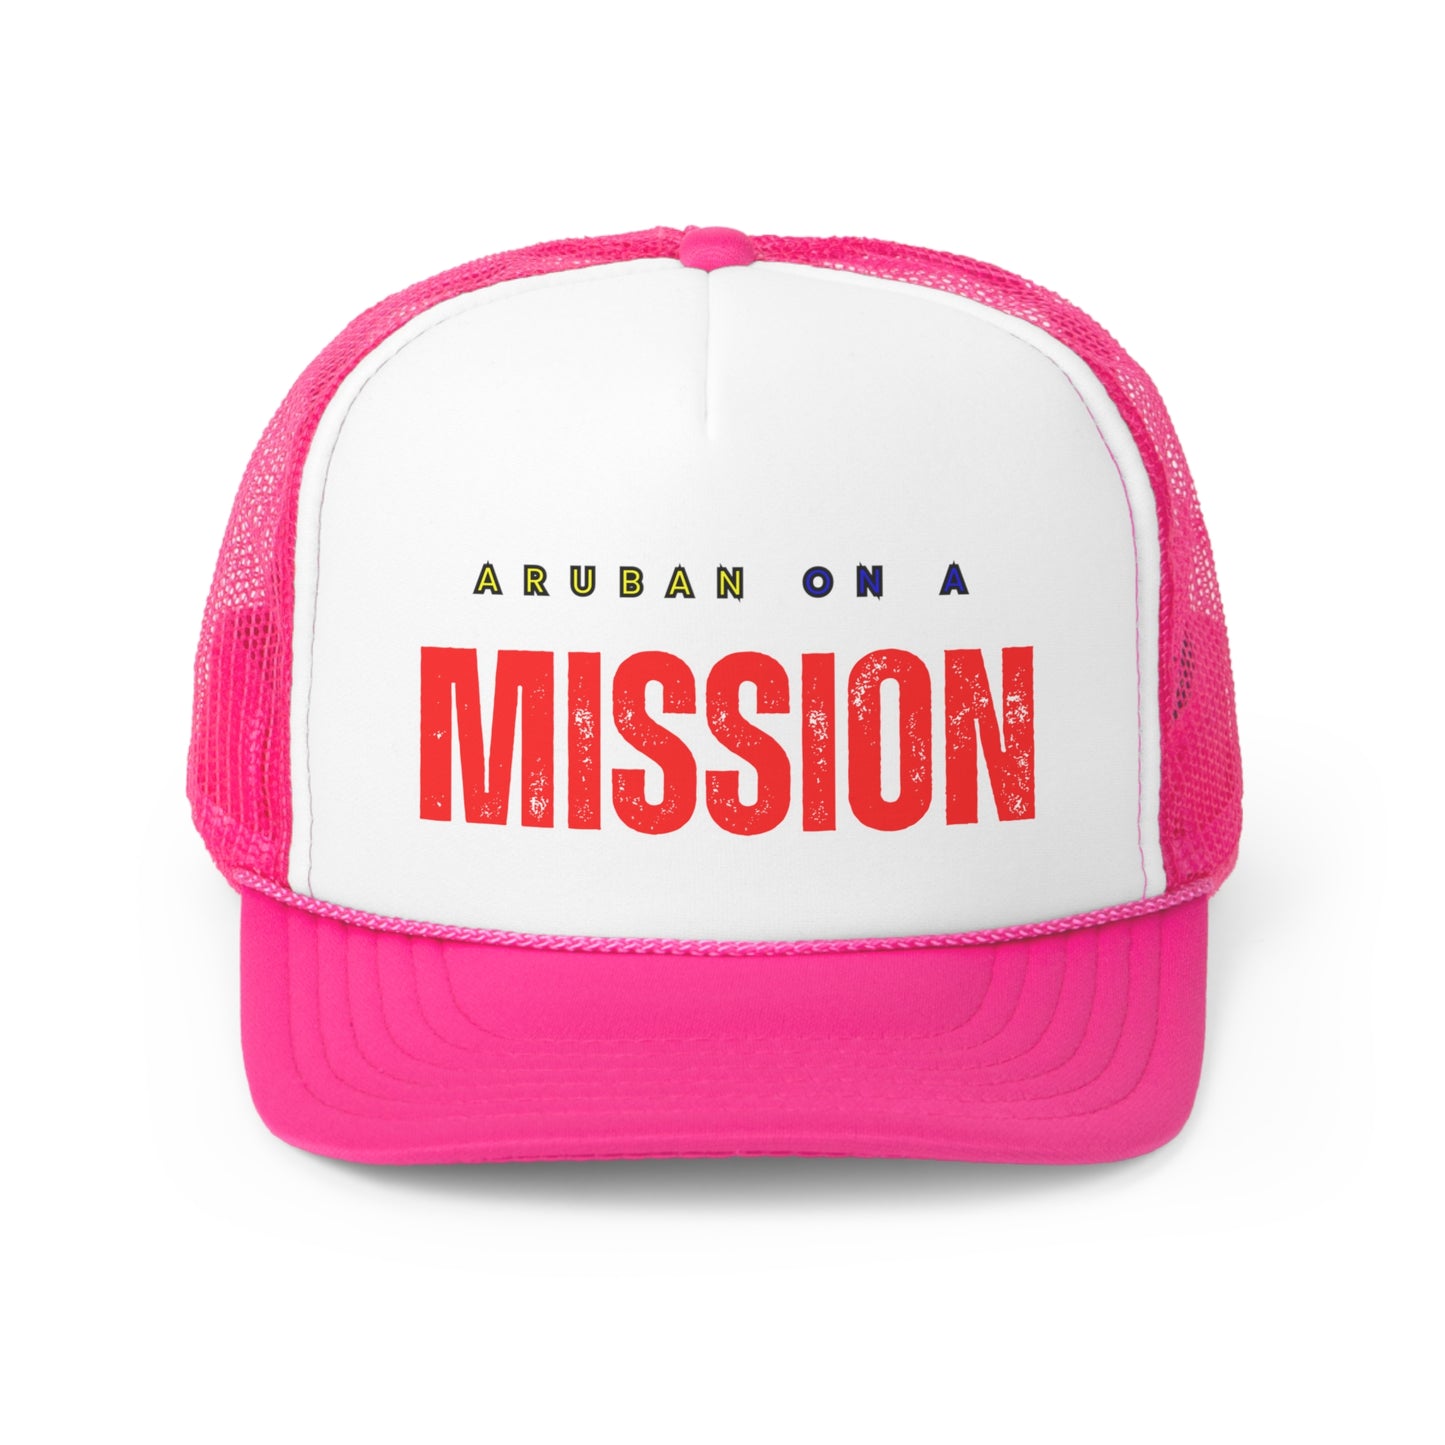 Aruban on a Mission Trucker Caps